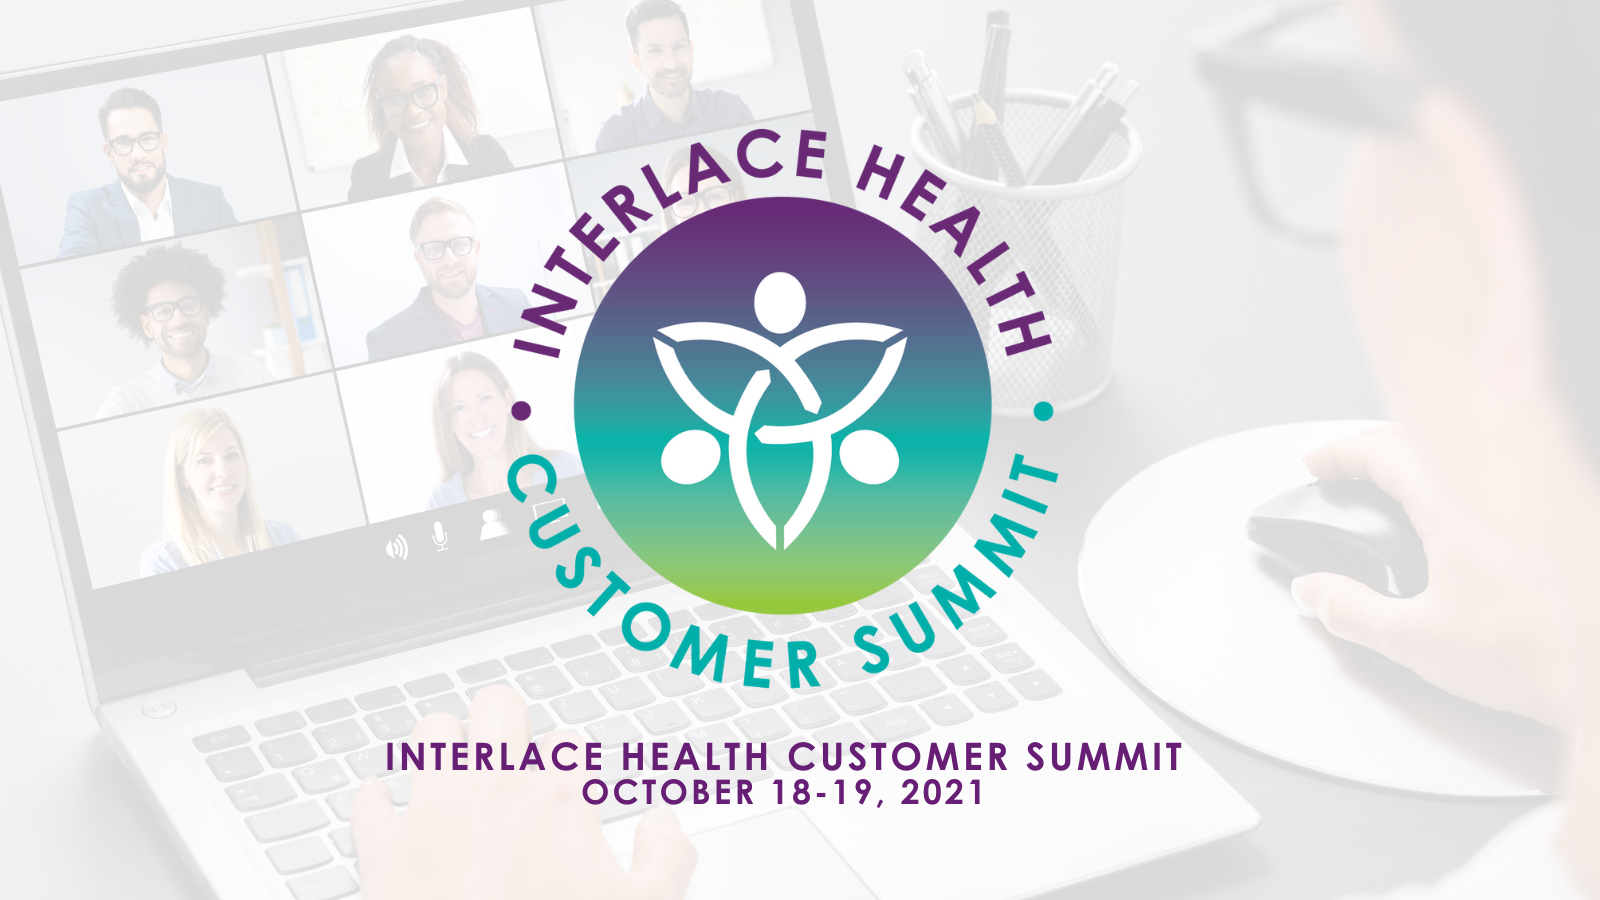 2021 Customer Summit Interlace Health